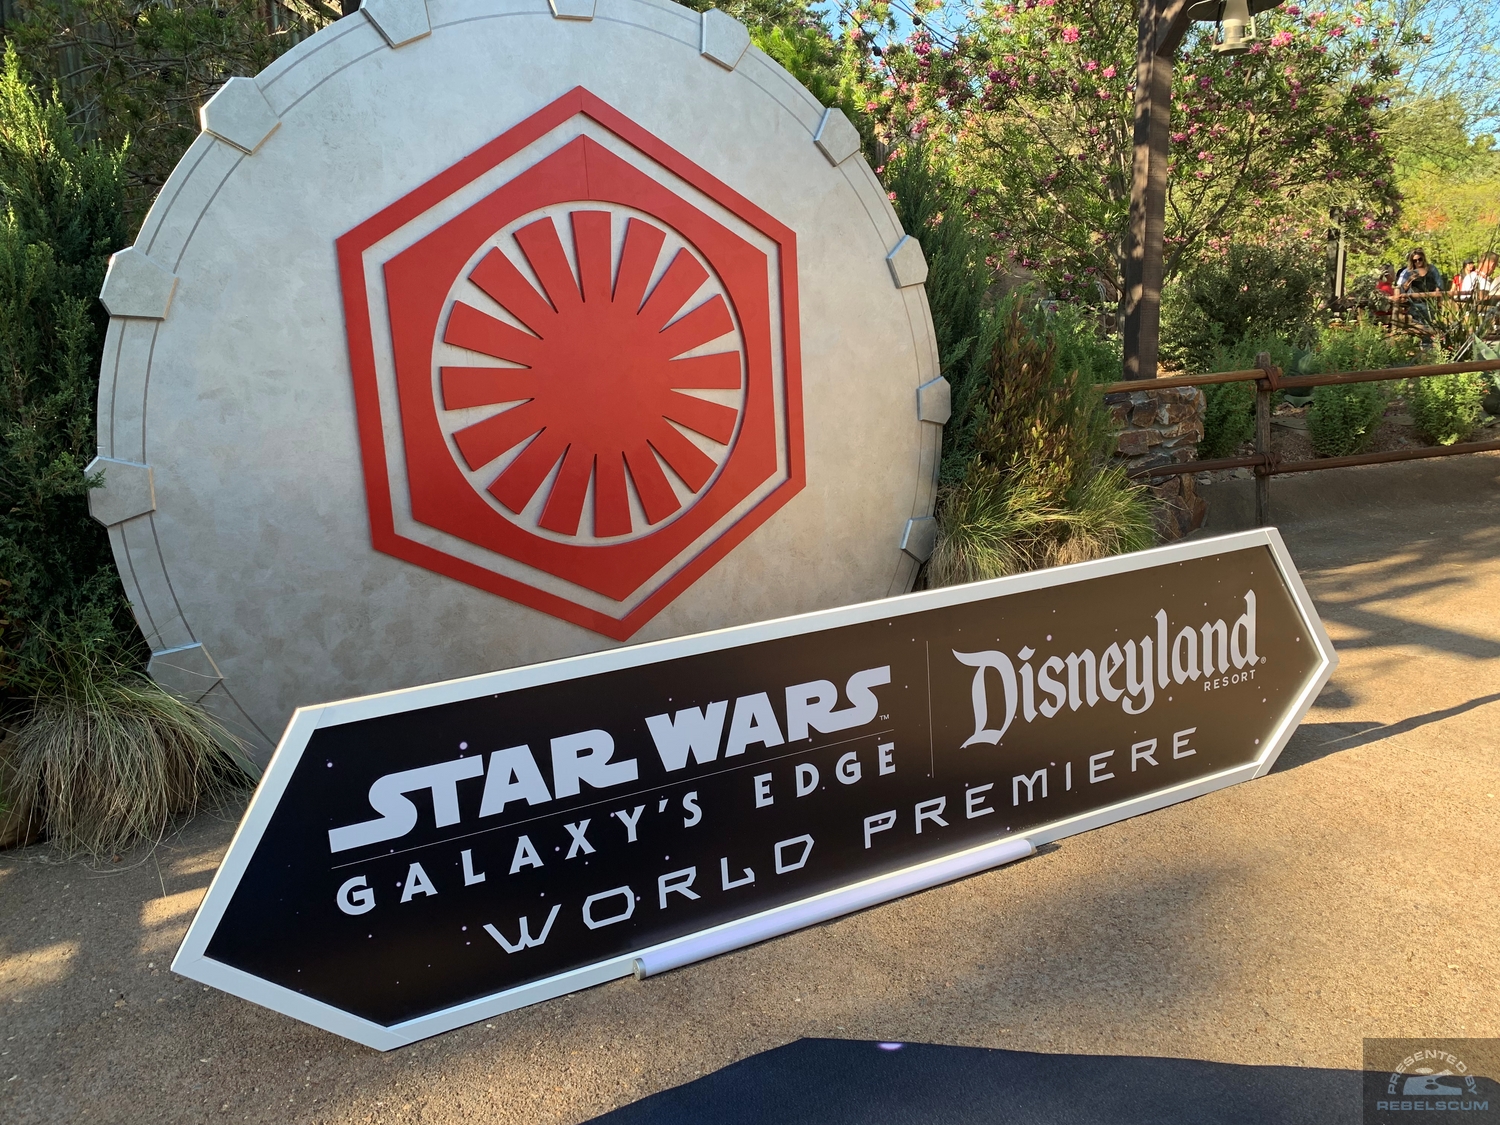 Star Wars Galaxys Edge Disneyland resort